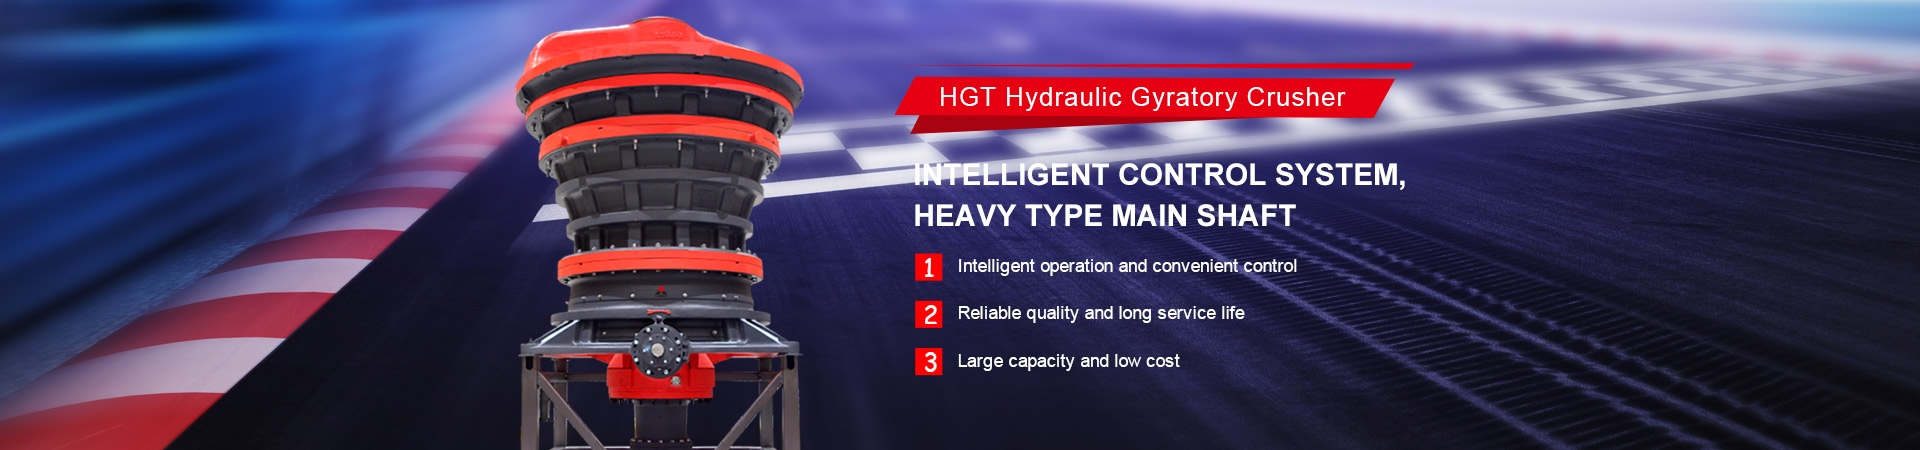 HGT4265 Hydraulic Gyratory Crusher